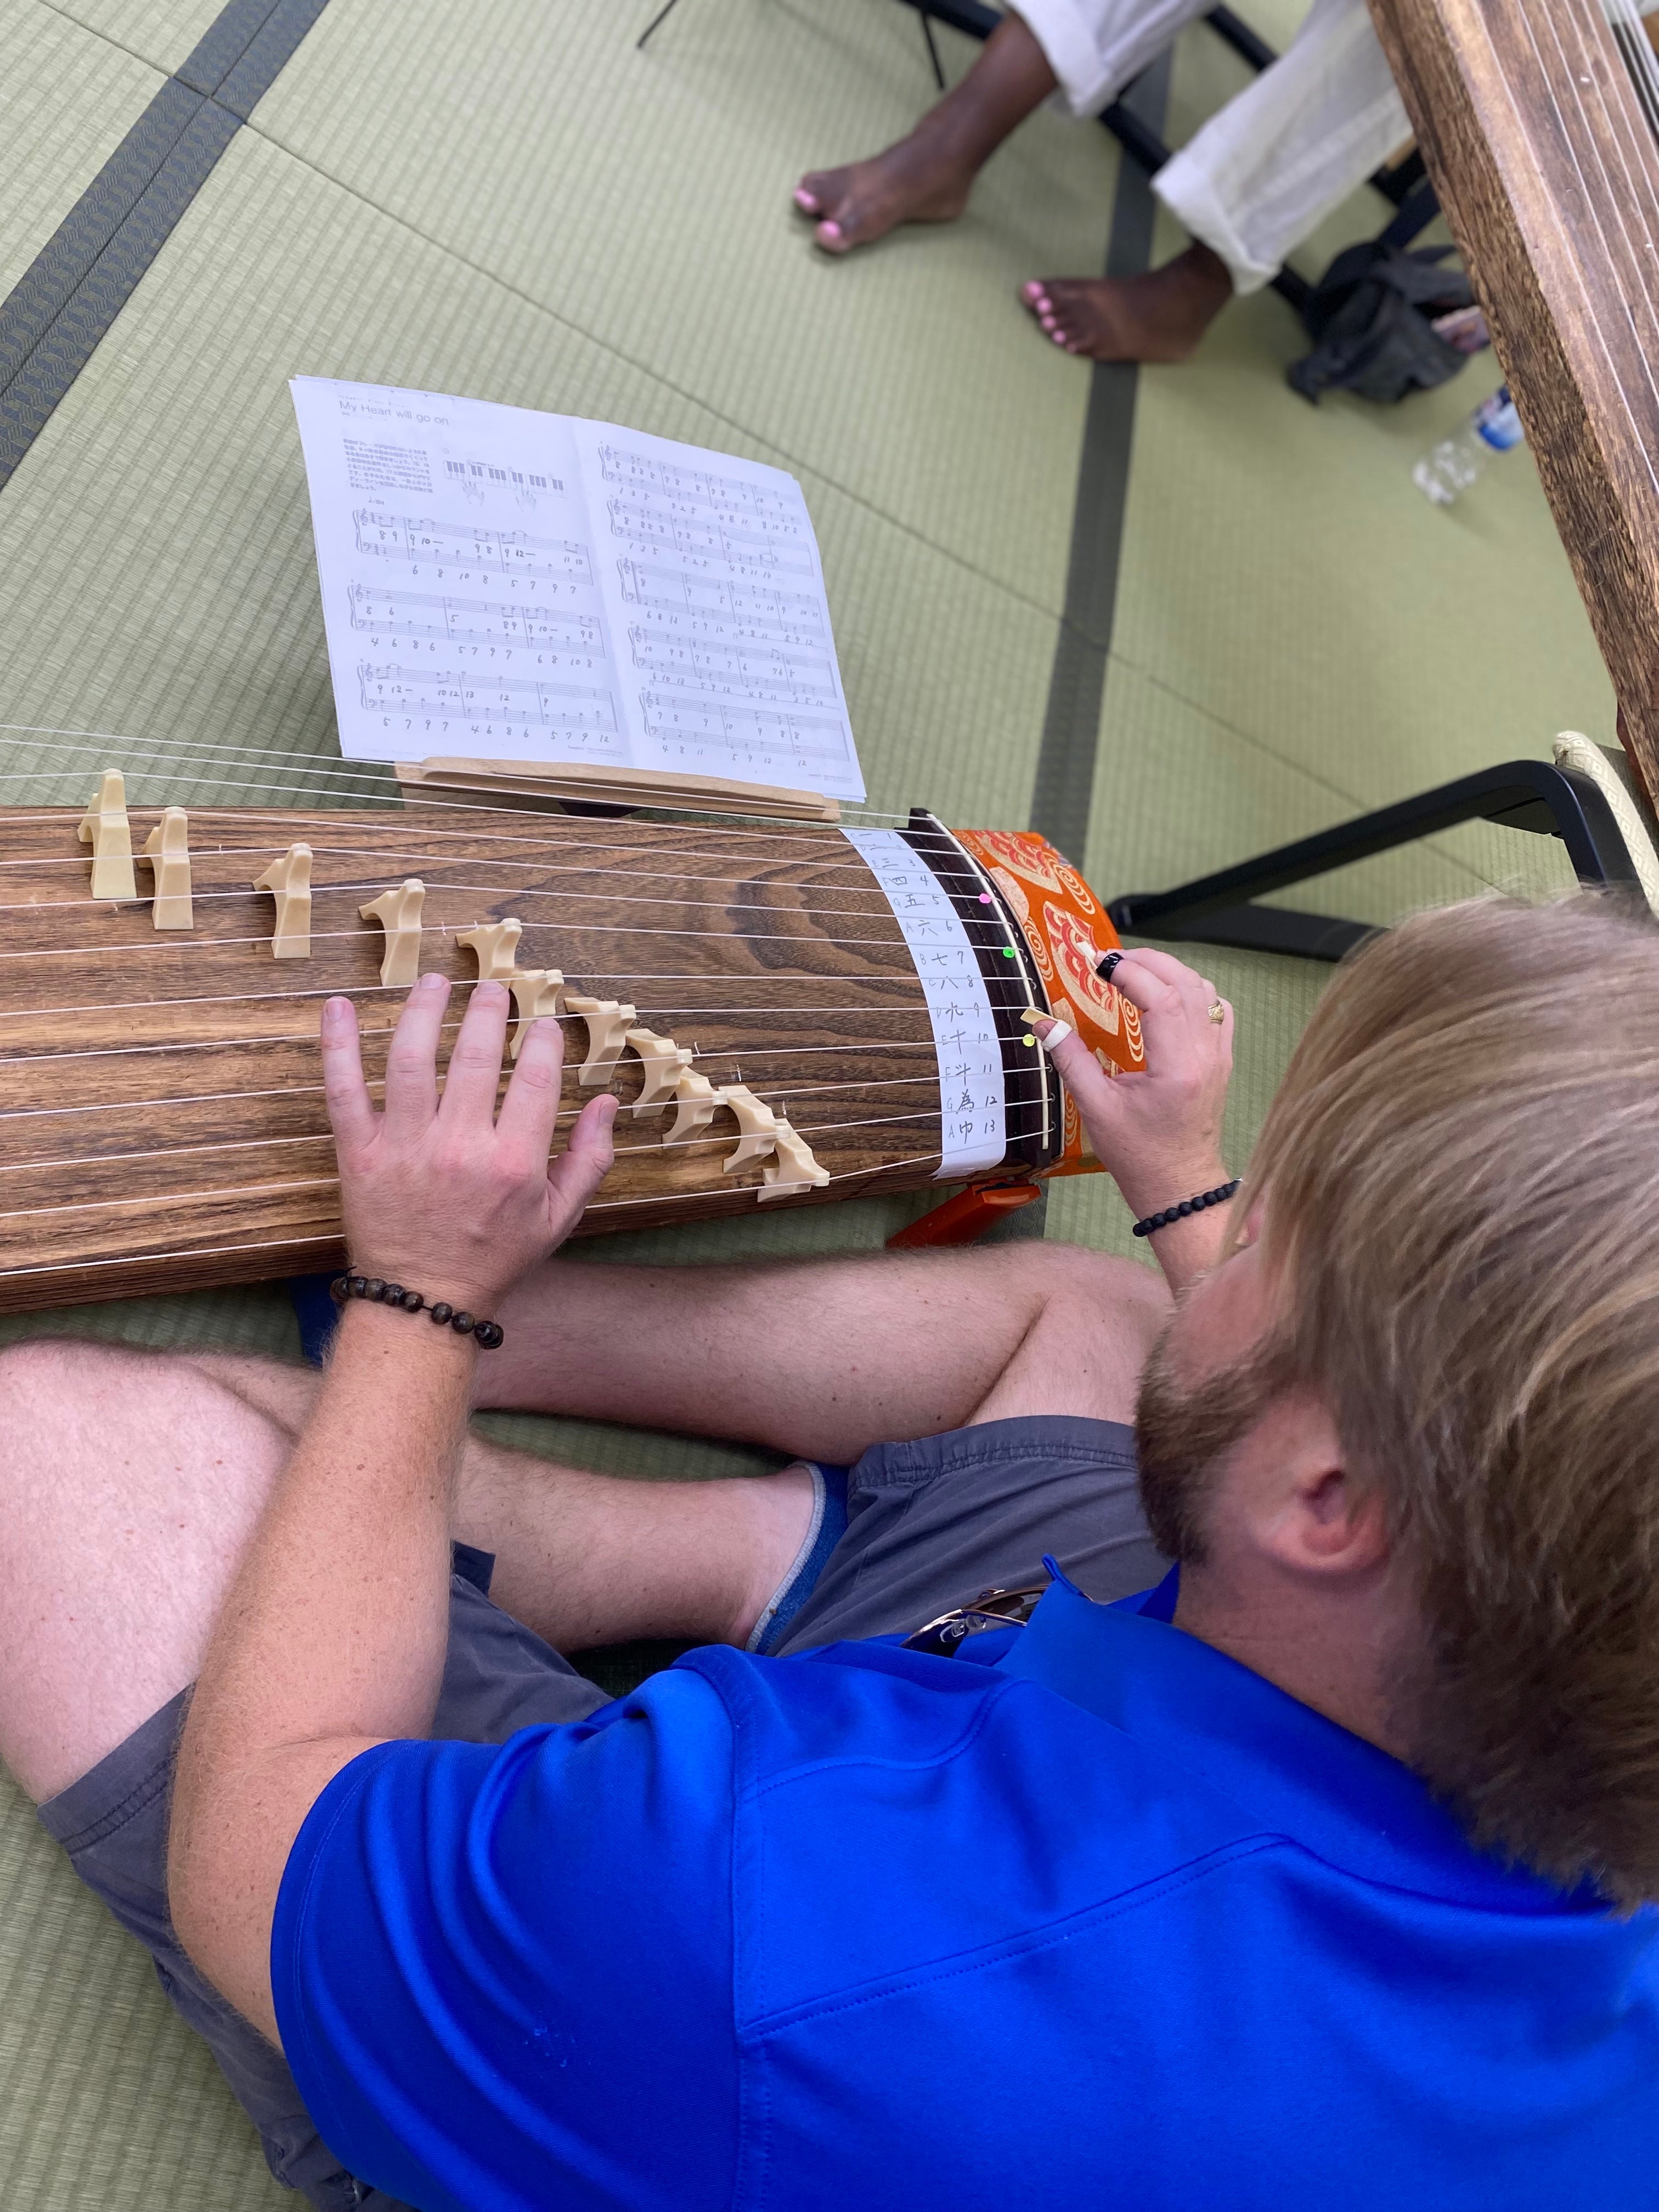 Koto - The “Japanese Harp”